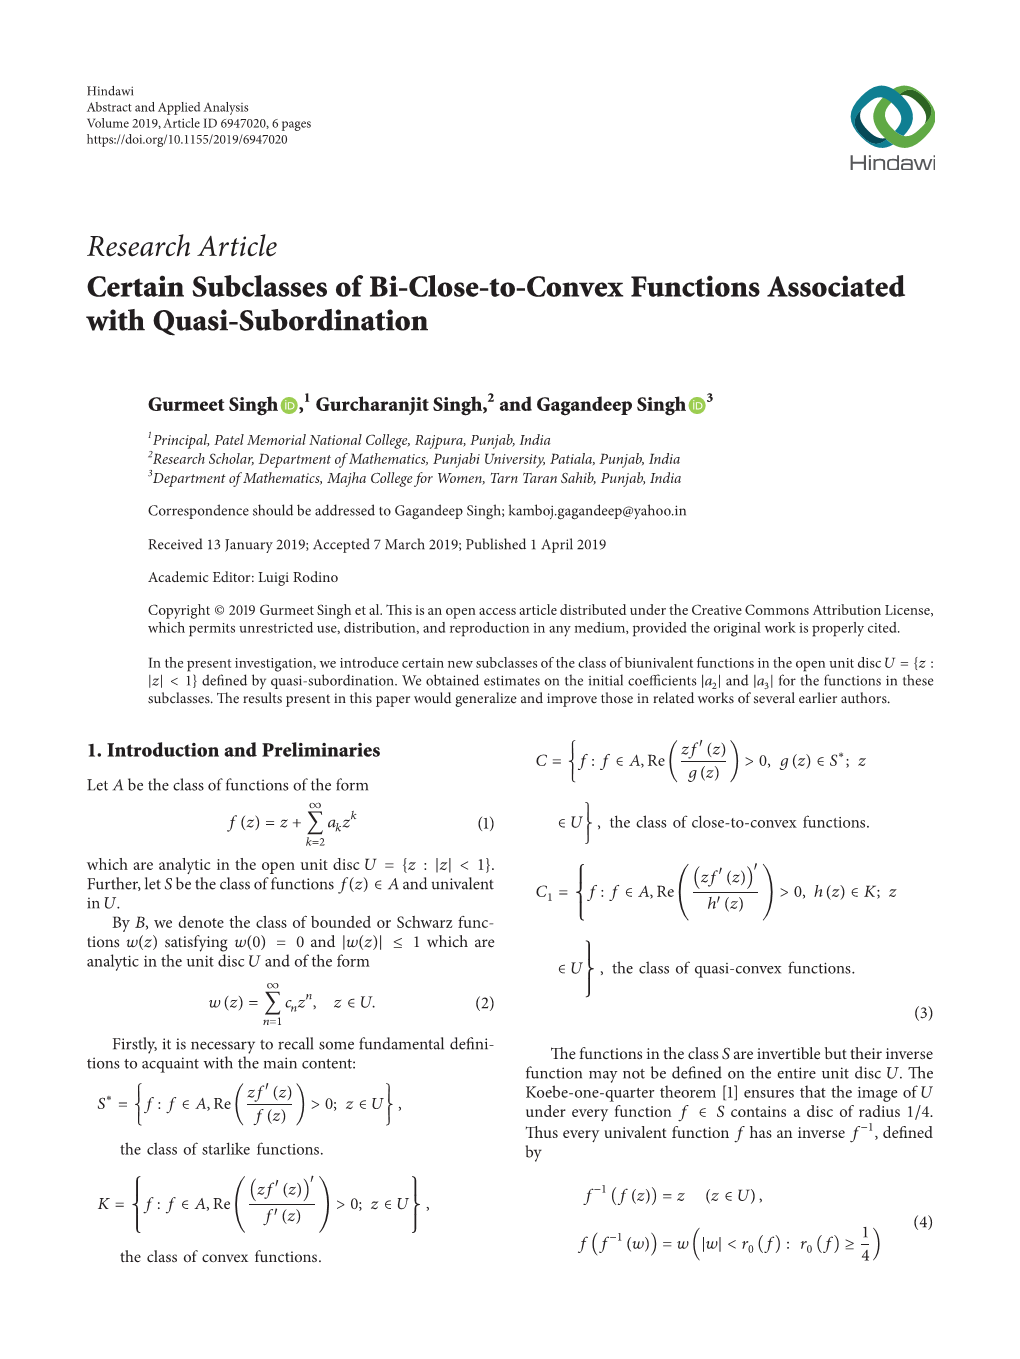 Certain Subclasses of Bi-Close-To-Convex Functions Associated with Quasi-Subordination